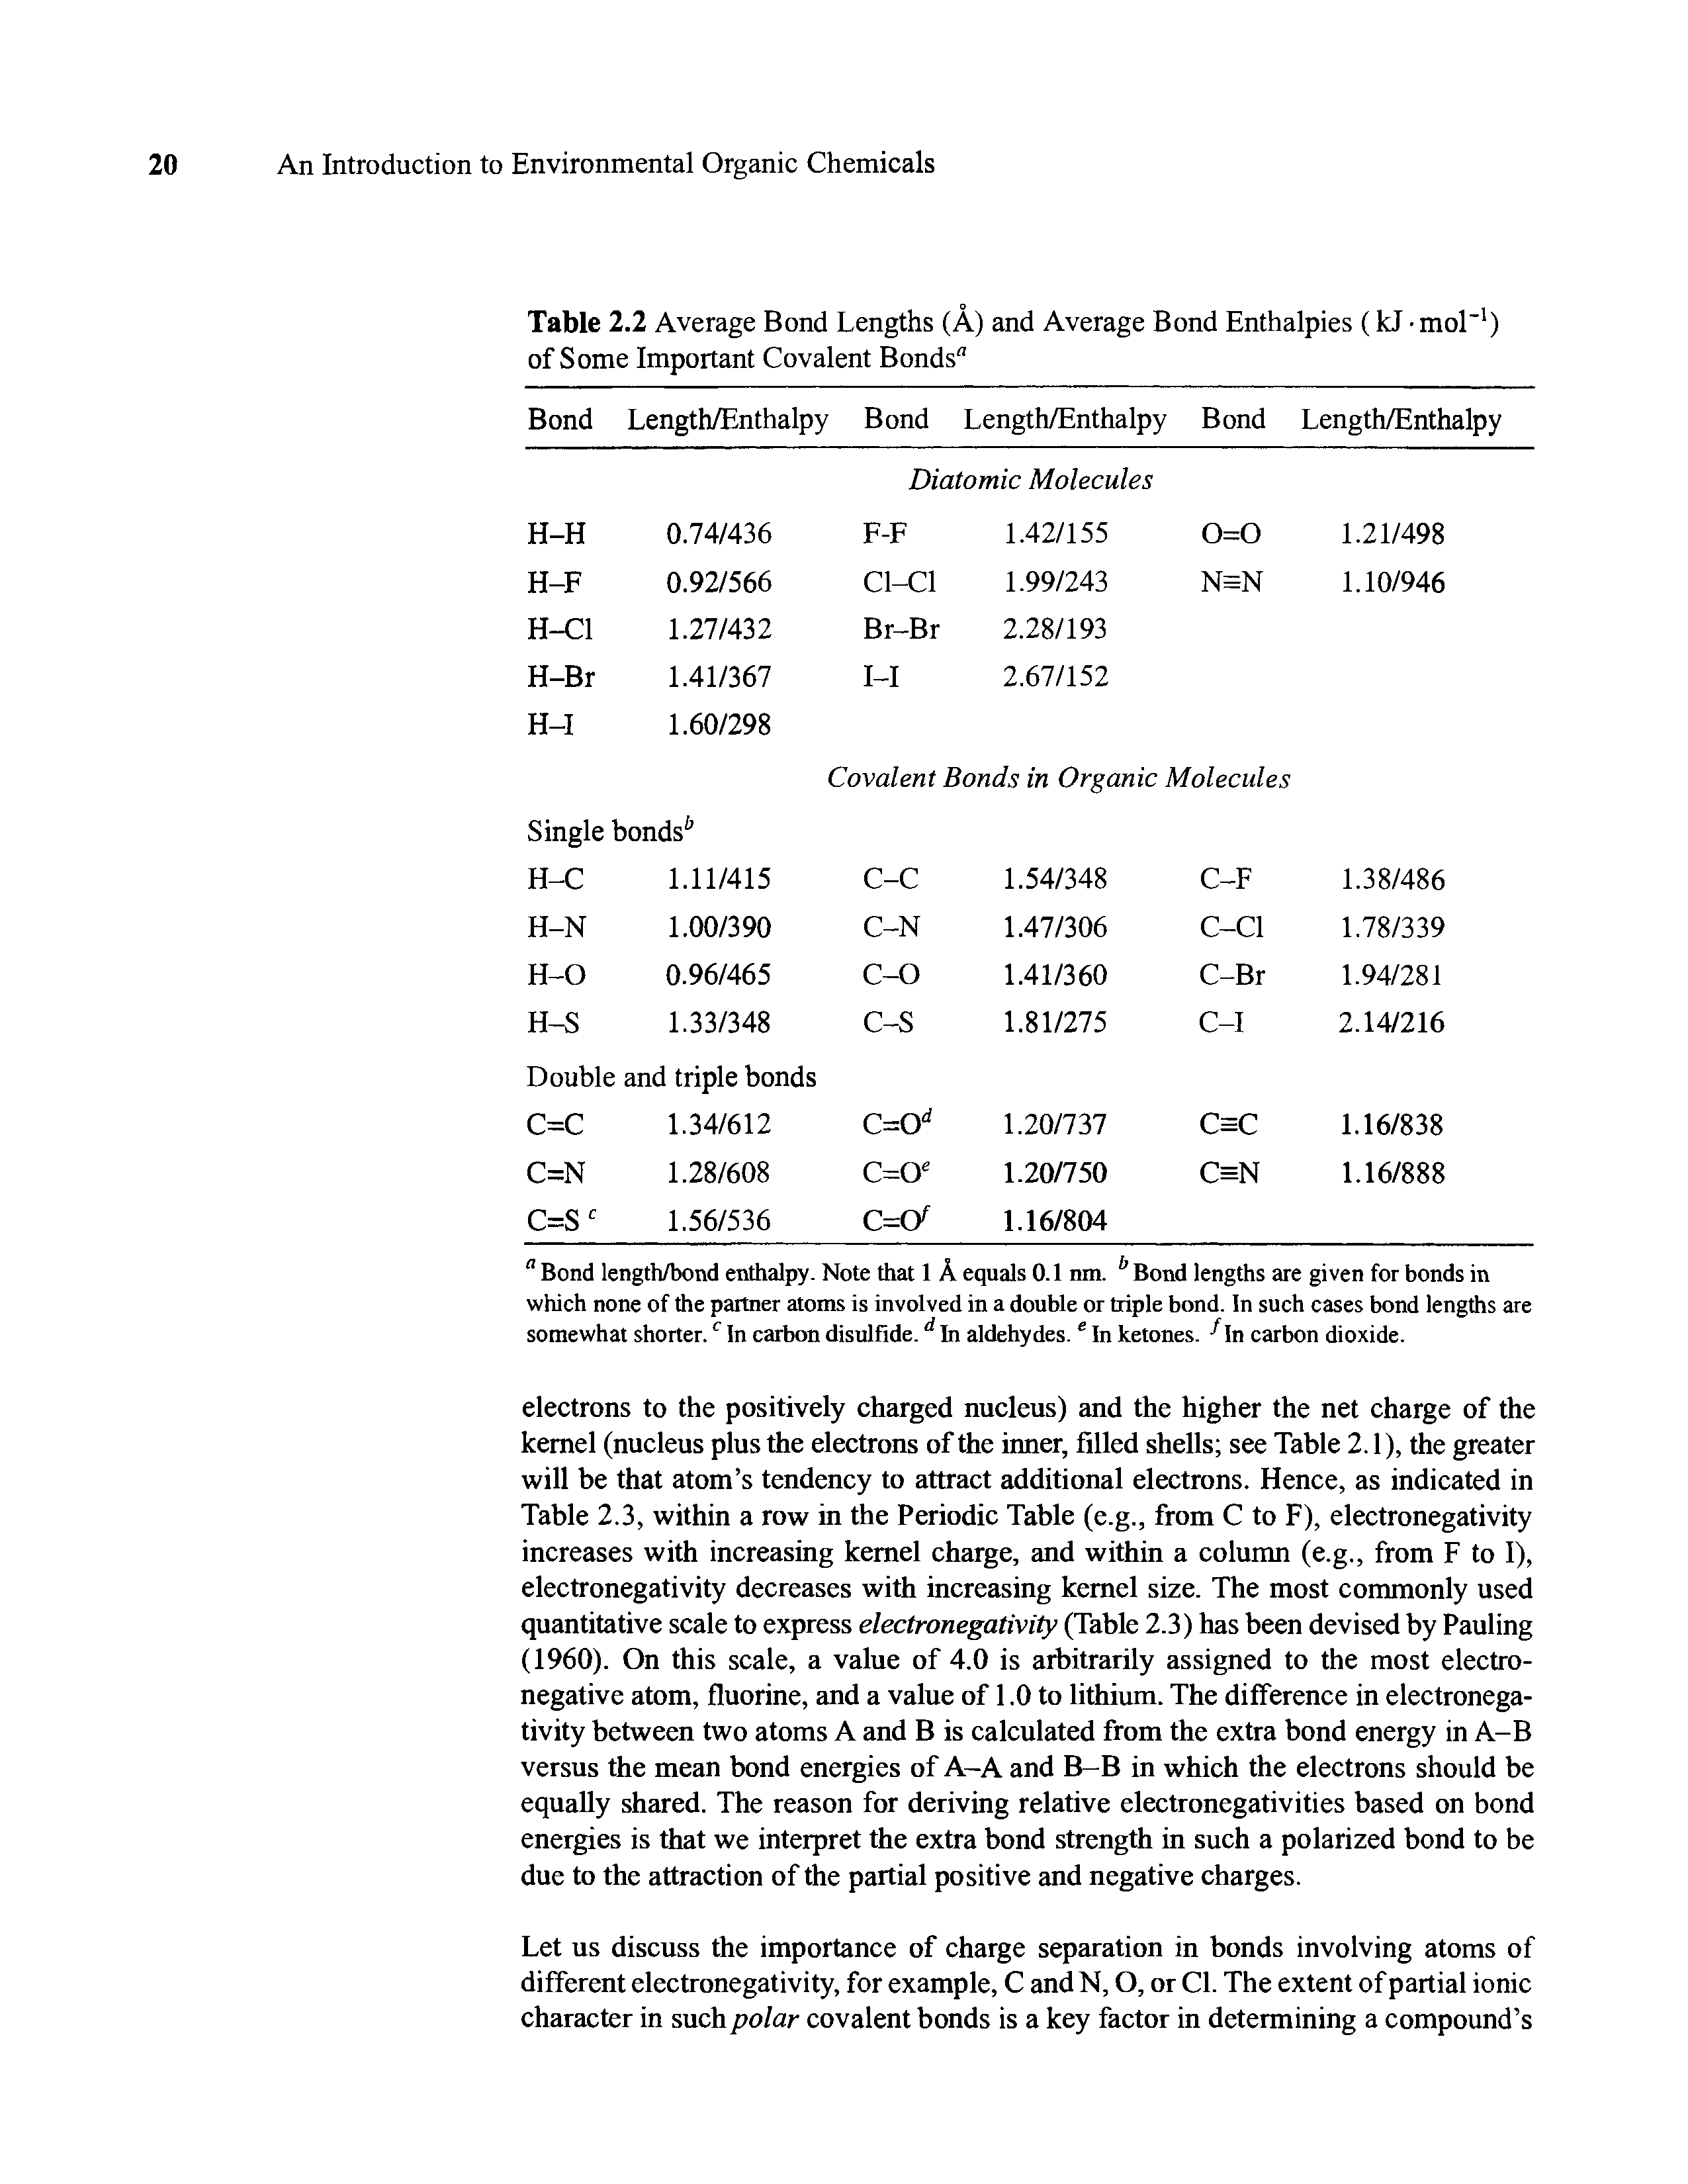 Table 2.2 Average Bond Lengths (A) and Average Bond Enthalpies (kJ mol 1) of Some Important Covalent Bonds"...